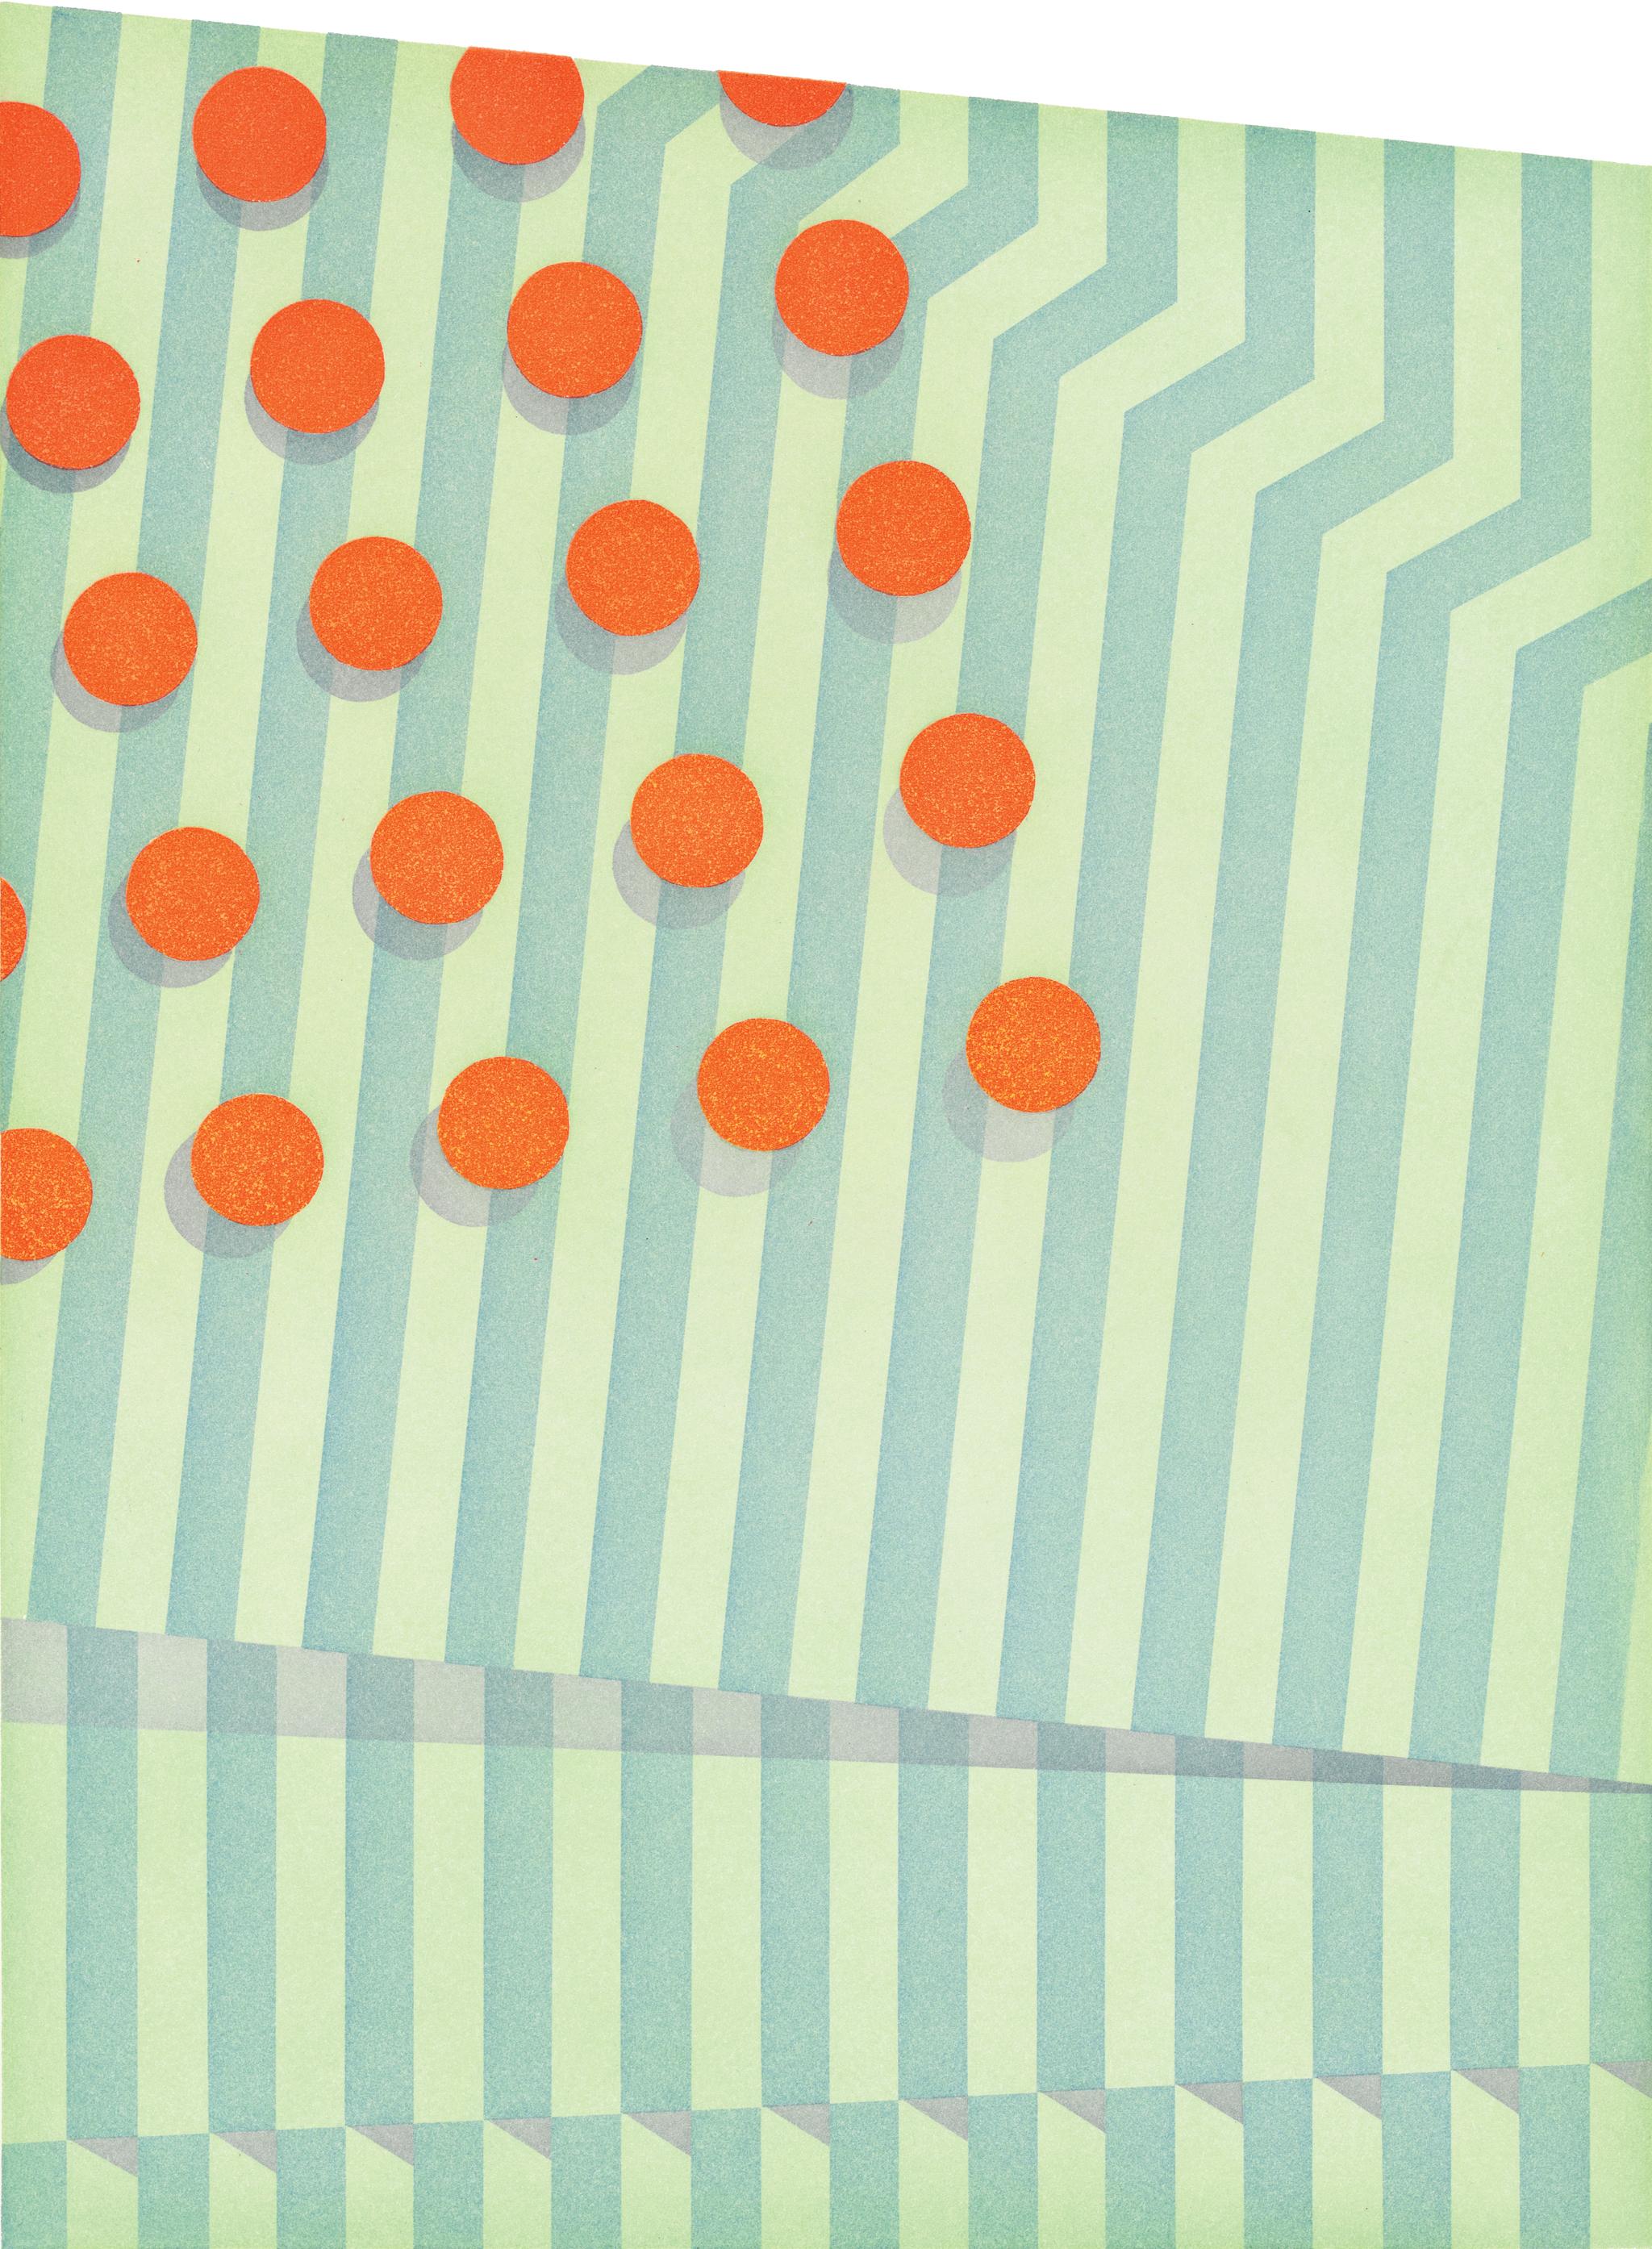 Tomma Abts Abstract Print – Untitled (small circles)